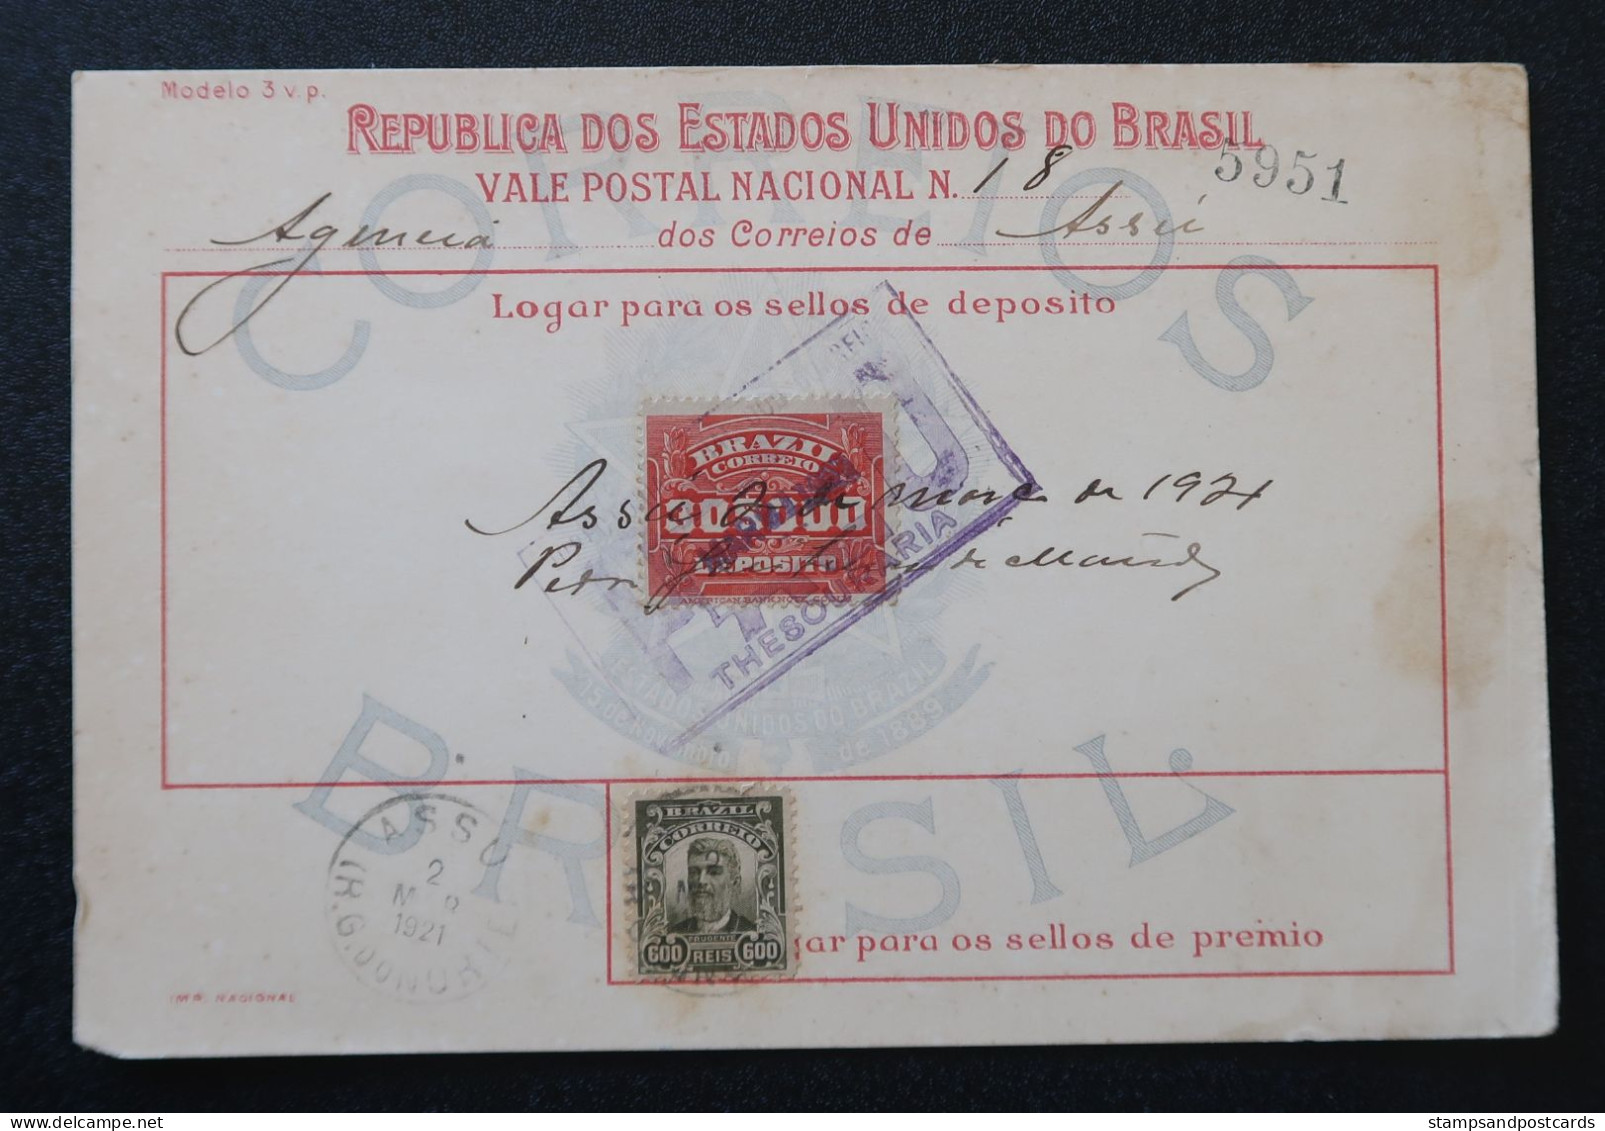 Brèsil Brasil Mandat Vale Postal 1921 Assú Açu Rio Grande Norte Timbre Fiscal Deposito Brazil Money Order Revenue Stamp - Covers & Documents